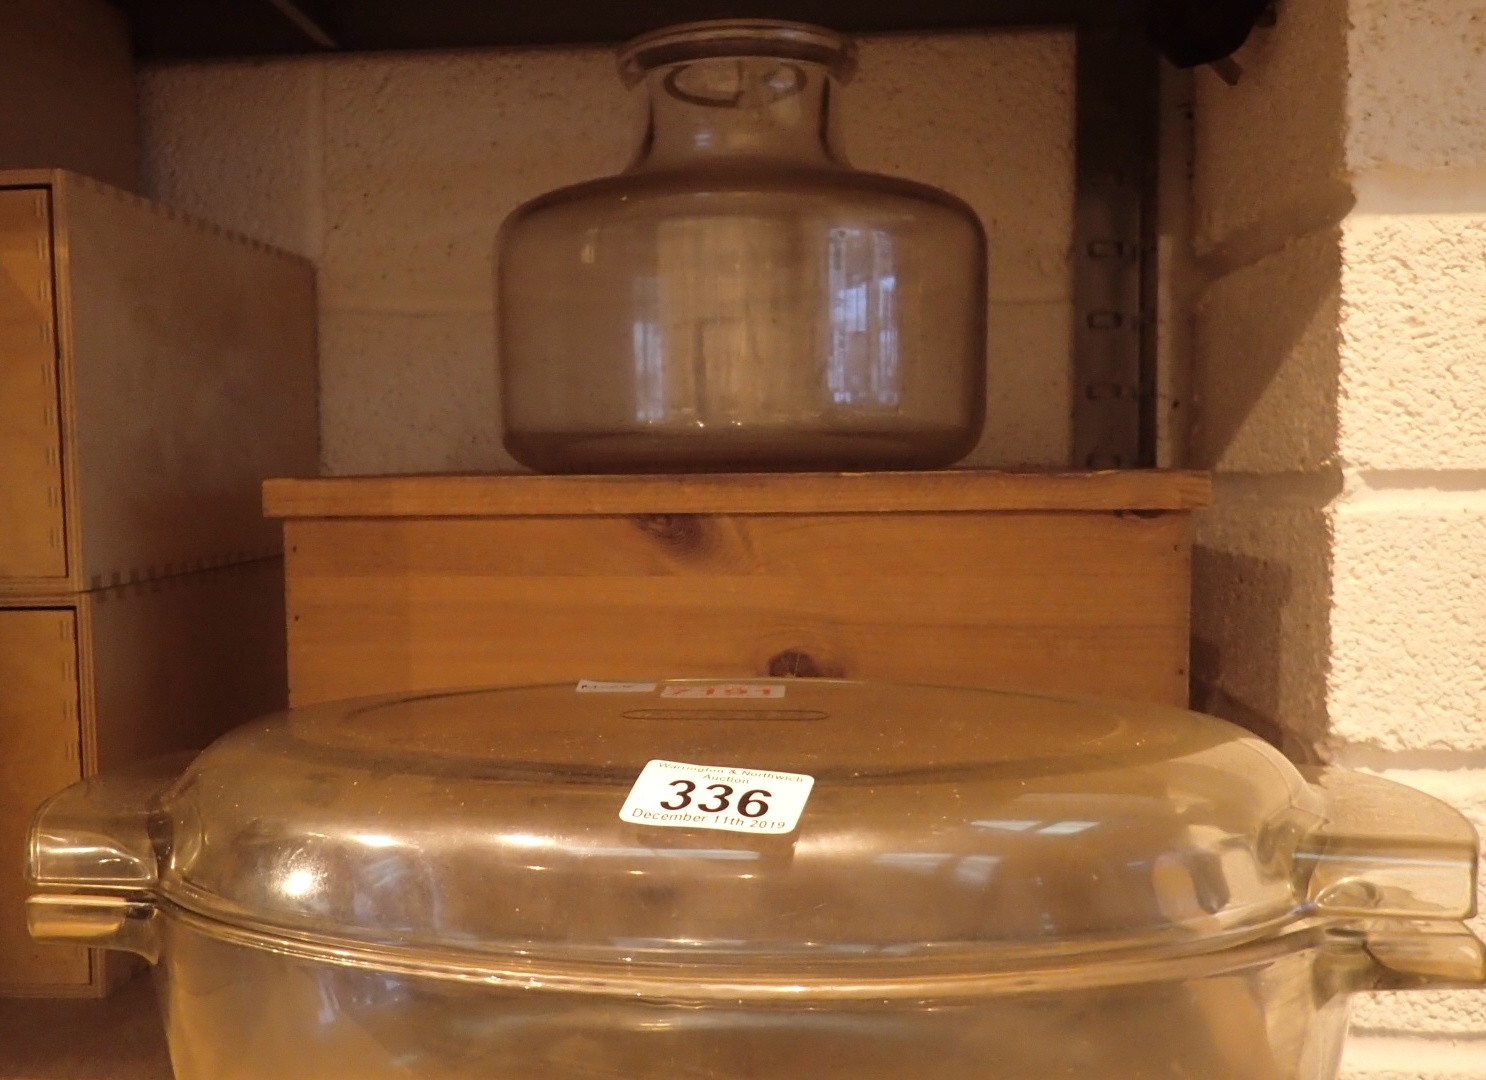 Large oval Pyrex casserole dish and glass storage jar